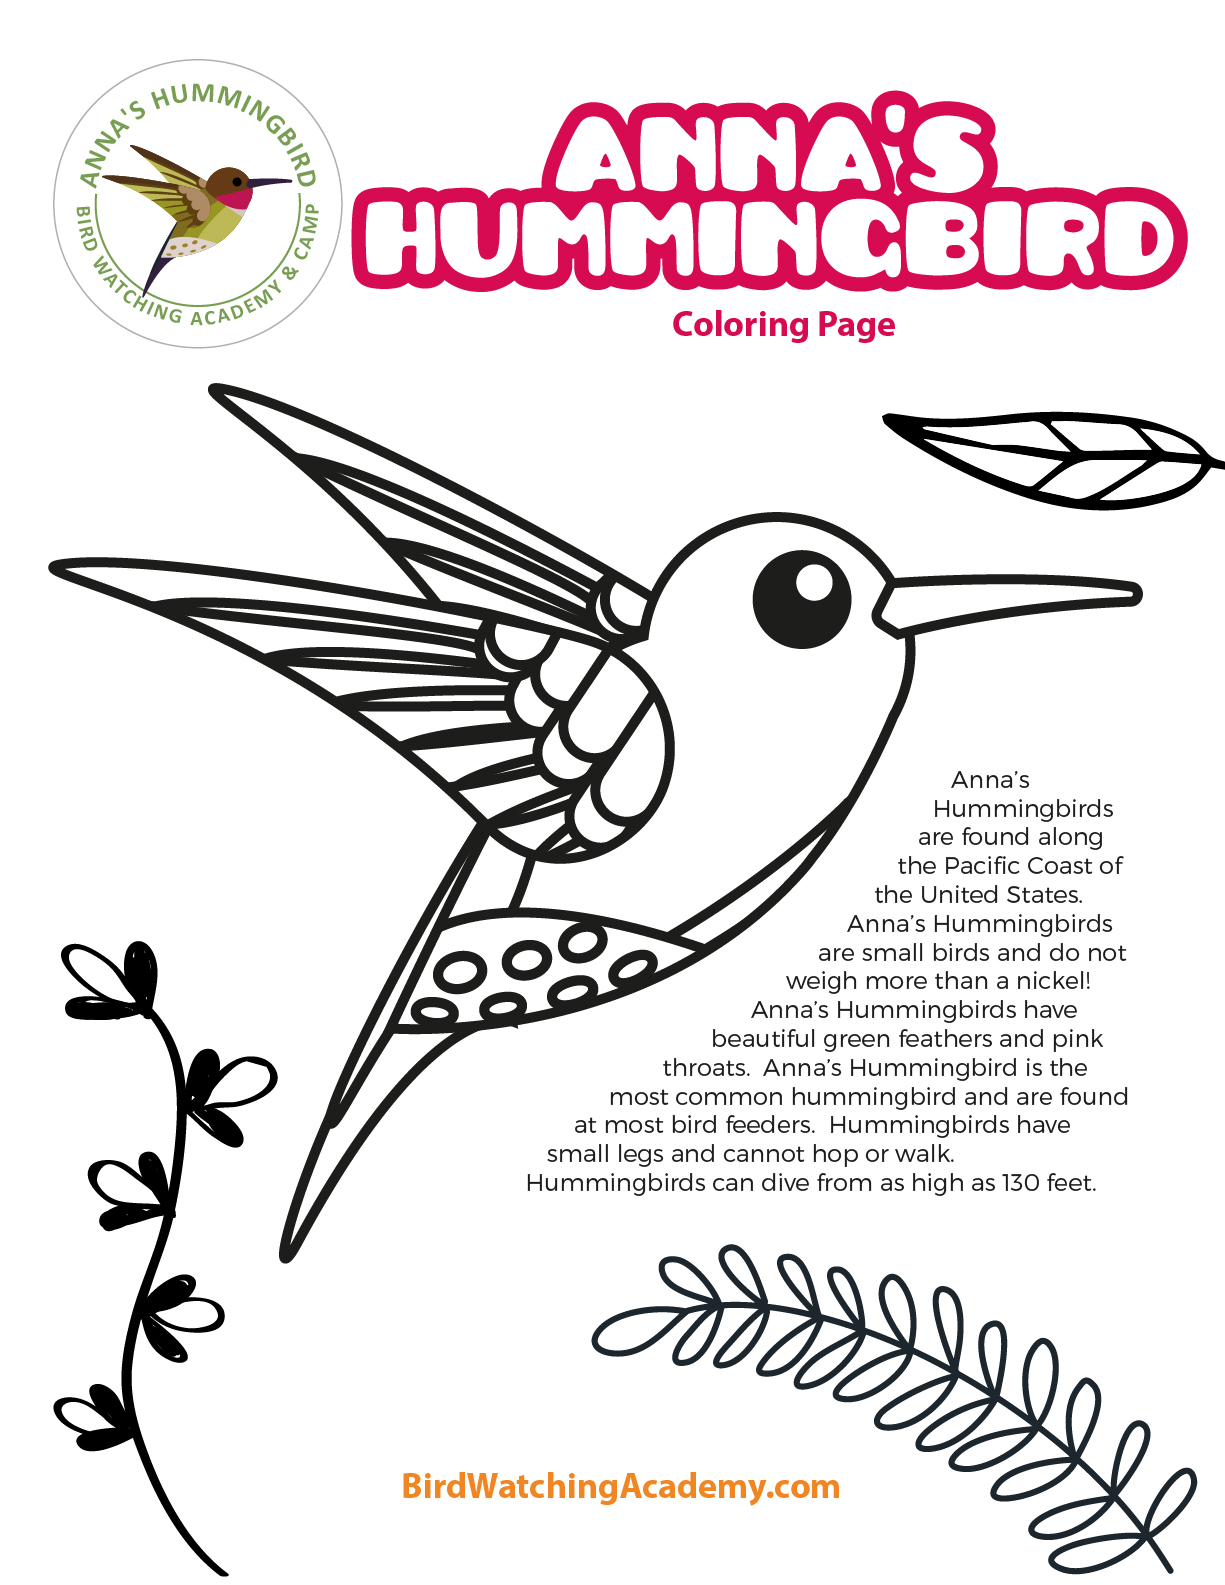 Annas hummingbird coloring page